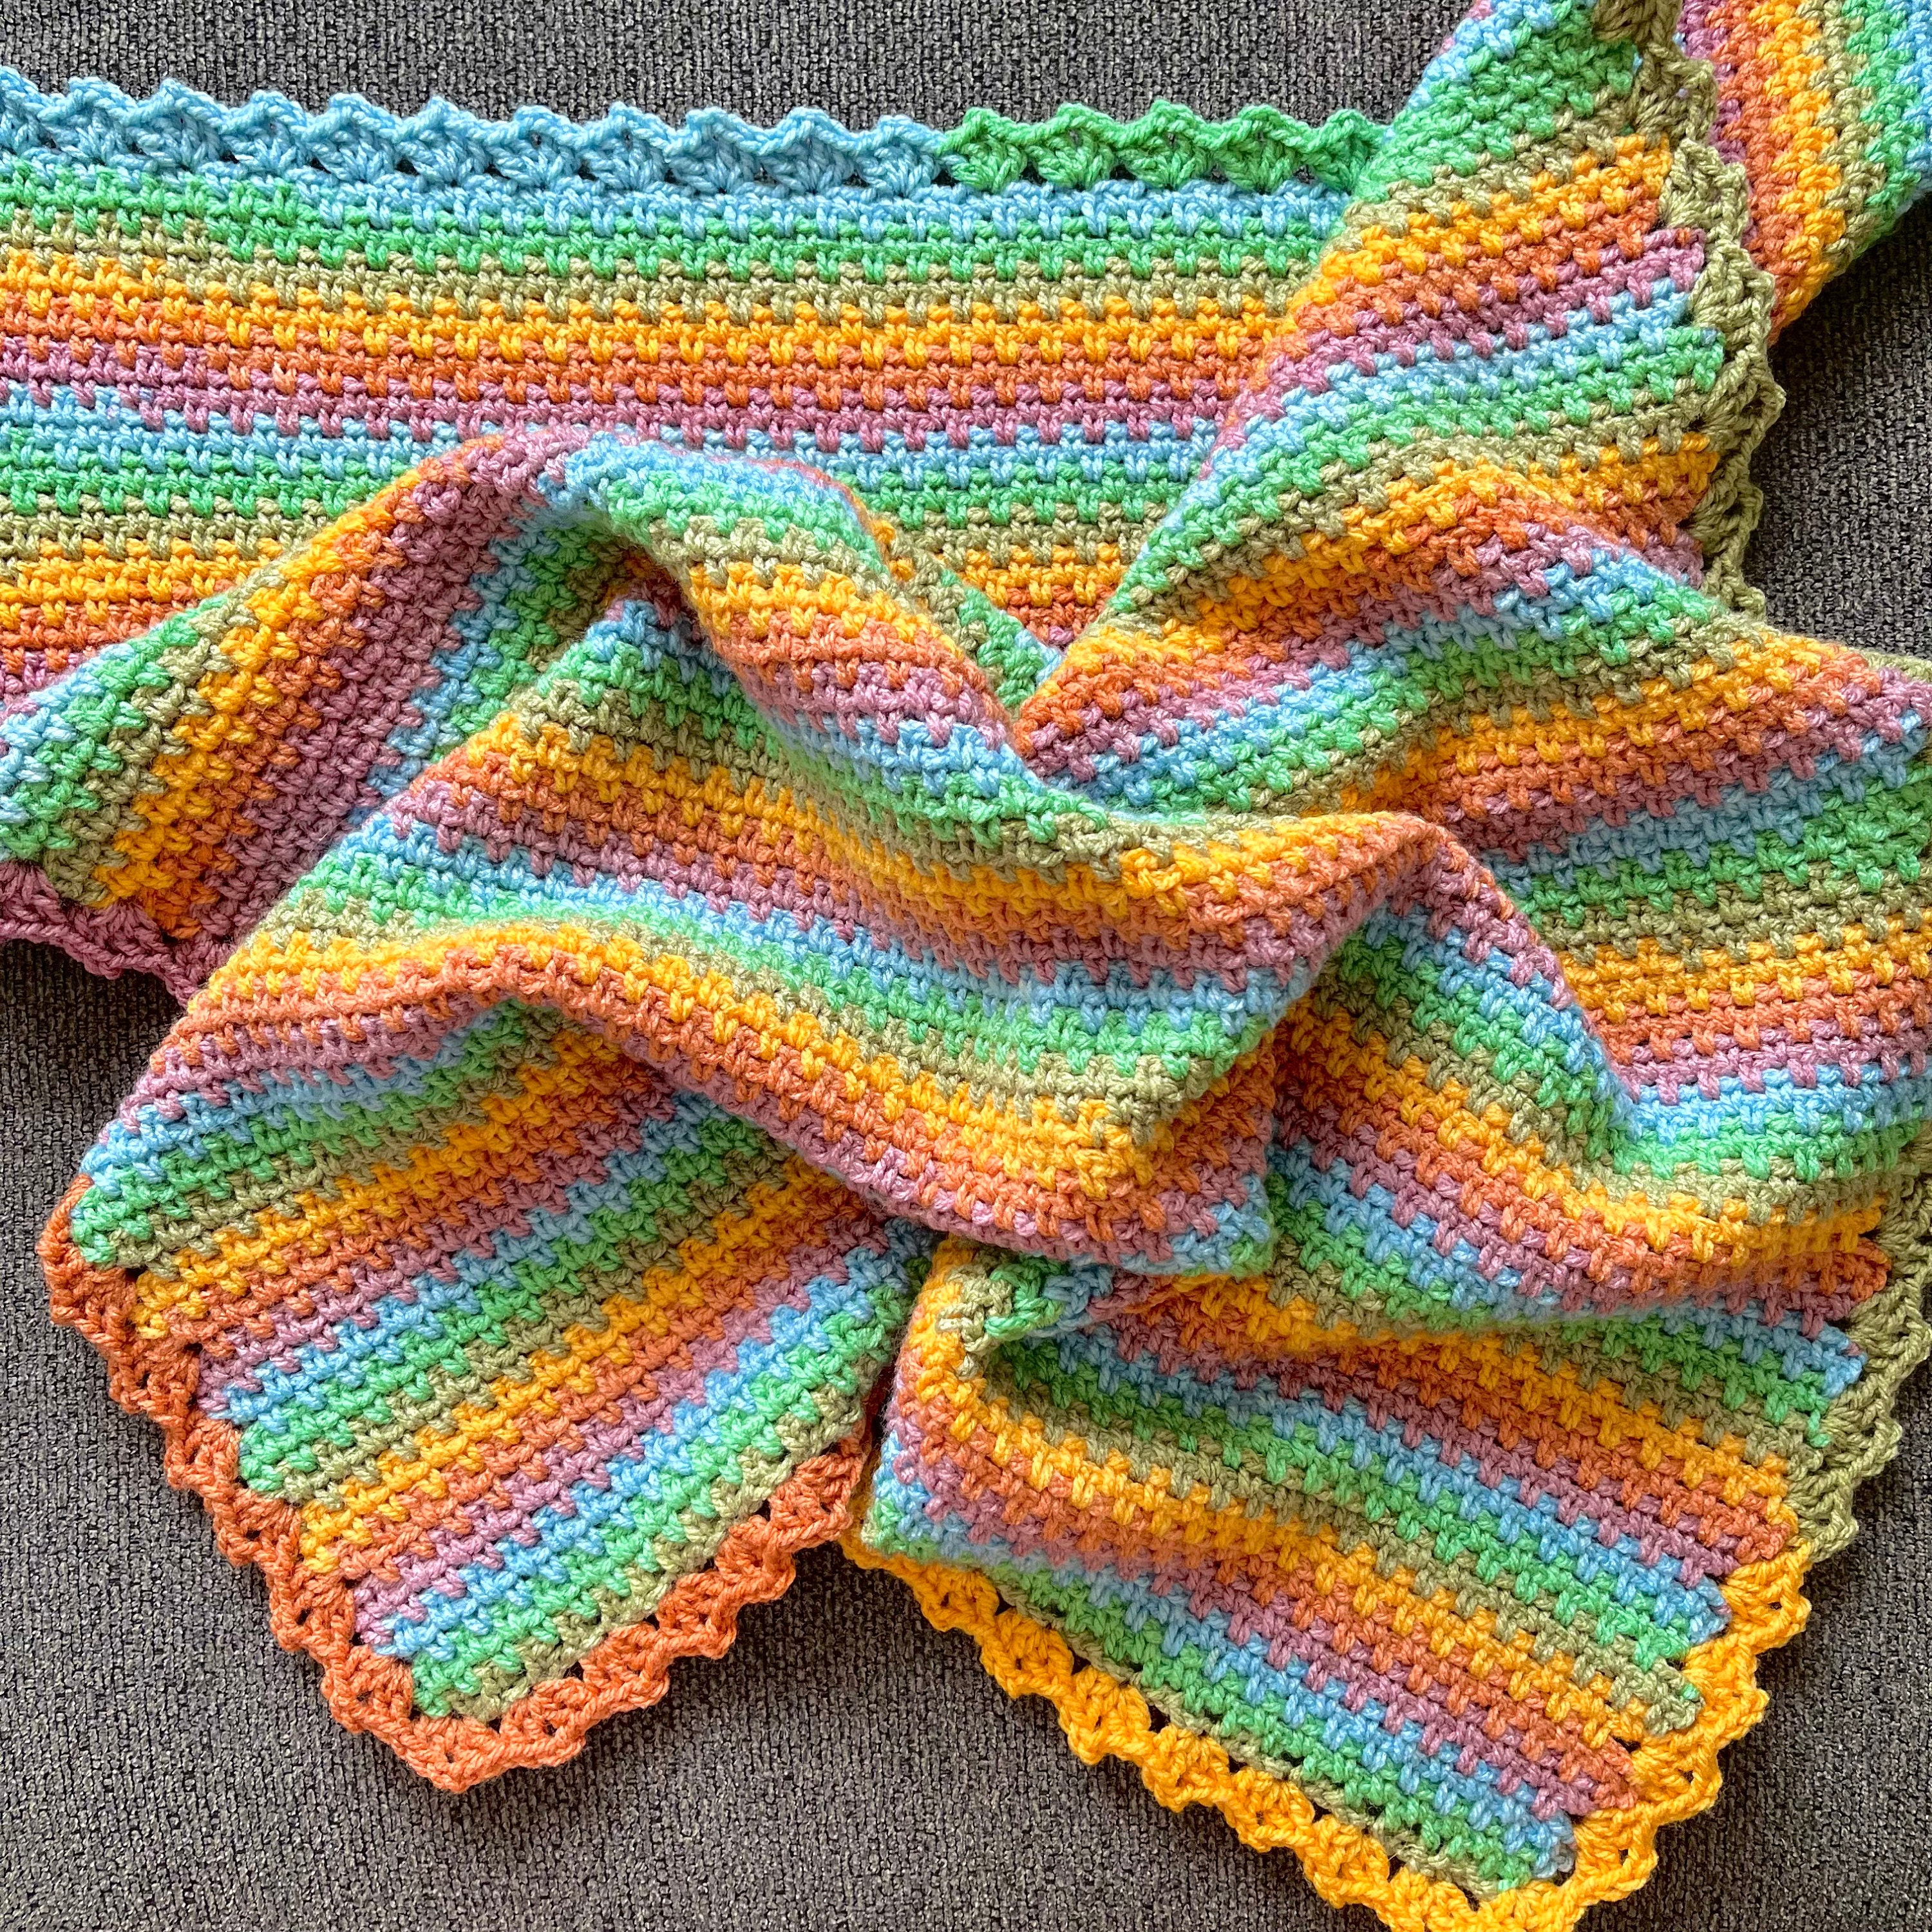 Caron Cinnamon Swirl Cakes Knitting Yarn Oyster Marble Beach Towel